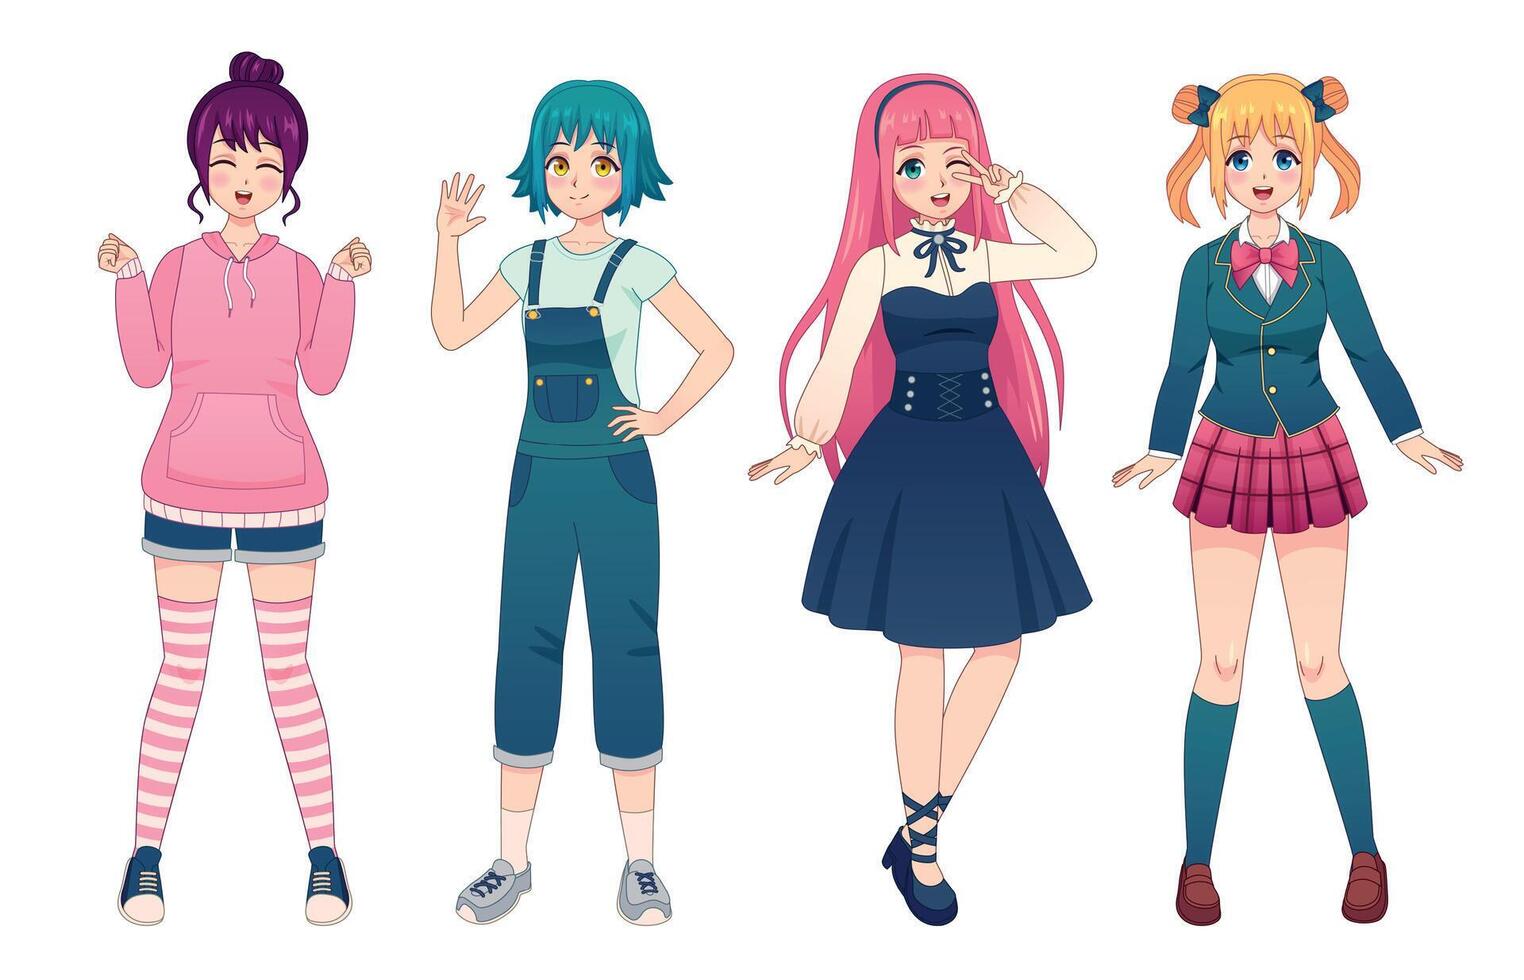 Anime girls. Beautiful japanese manga schoolgirls in uniform, lolita style dress, overalls and hoodie. Happy kawaii female poses vector set